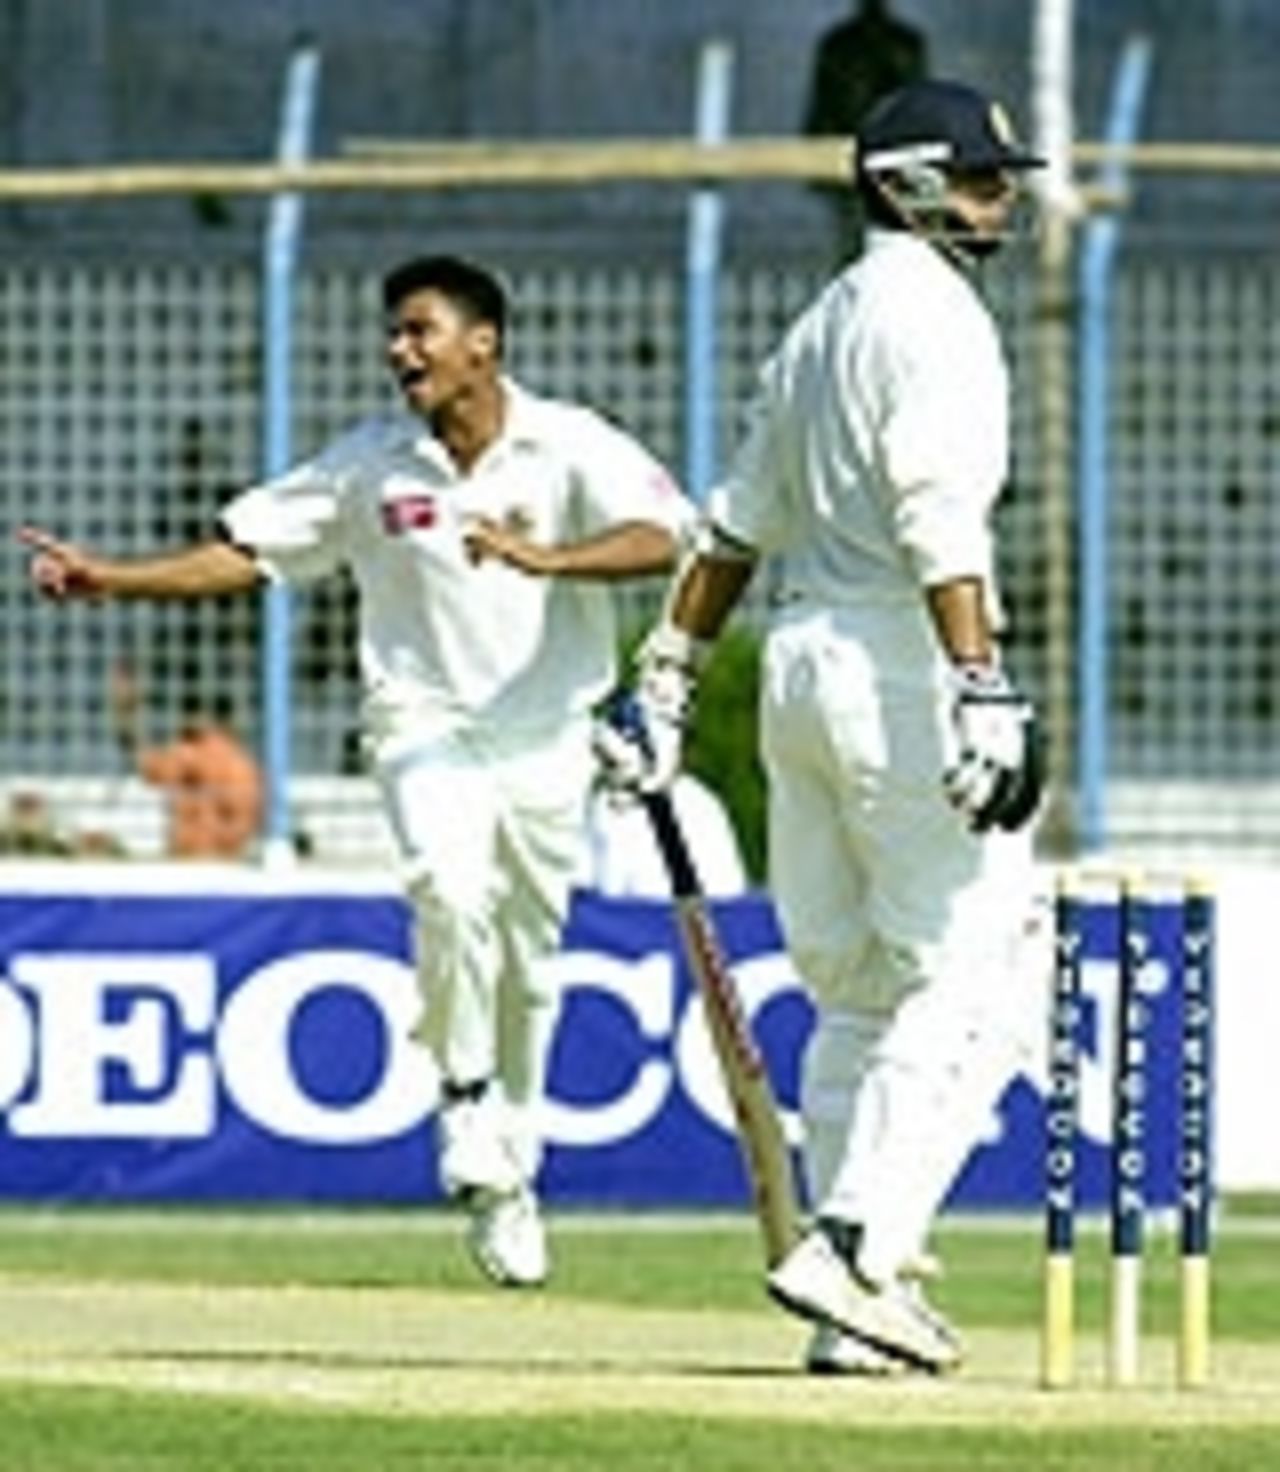 Mashrafe Mortaza dismisses Rahul Dravid, Bangladesh v India, 2nd Test, Chittagong, 2nd day, December 18, 2004